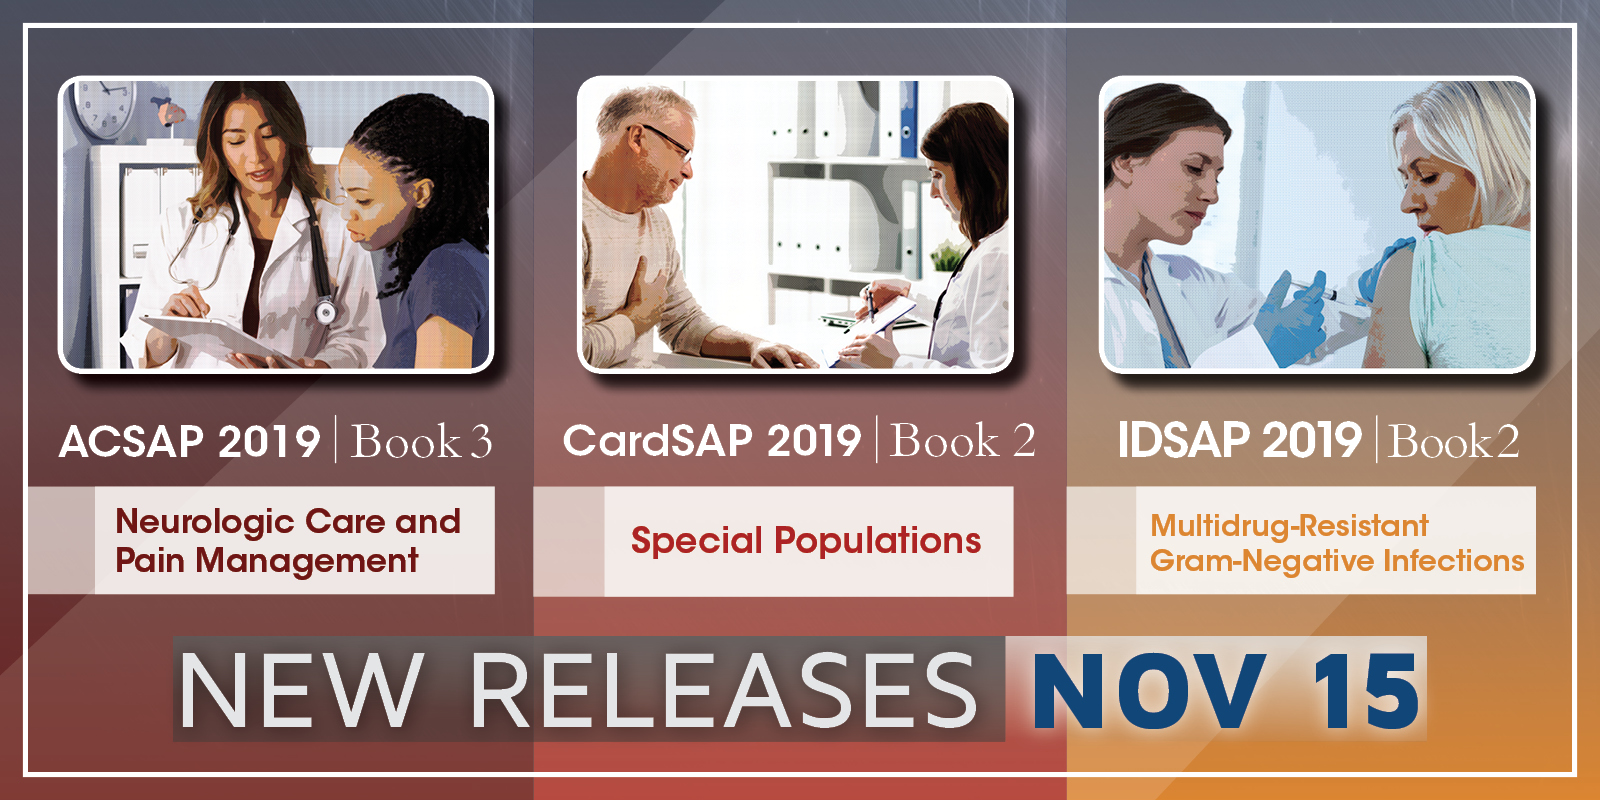 New Releases November 15: ACSAP 2019 Book 3 - Neurologic Care and Pain Management, CardSAP 2019 Book 2 - Special Populations, IDSAP 2019 Book 2 - Multidrug-Resistant Gram-Negative Infections